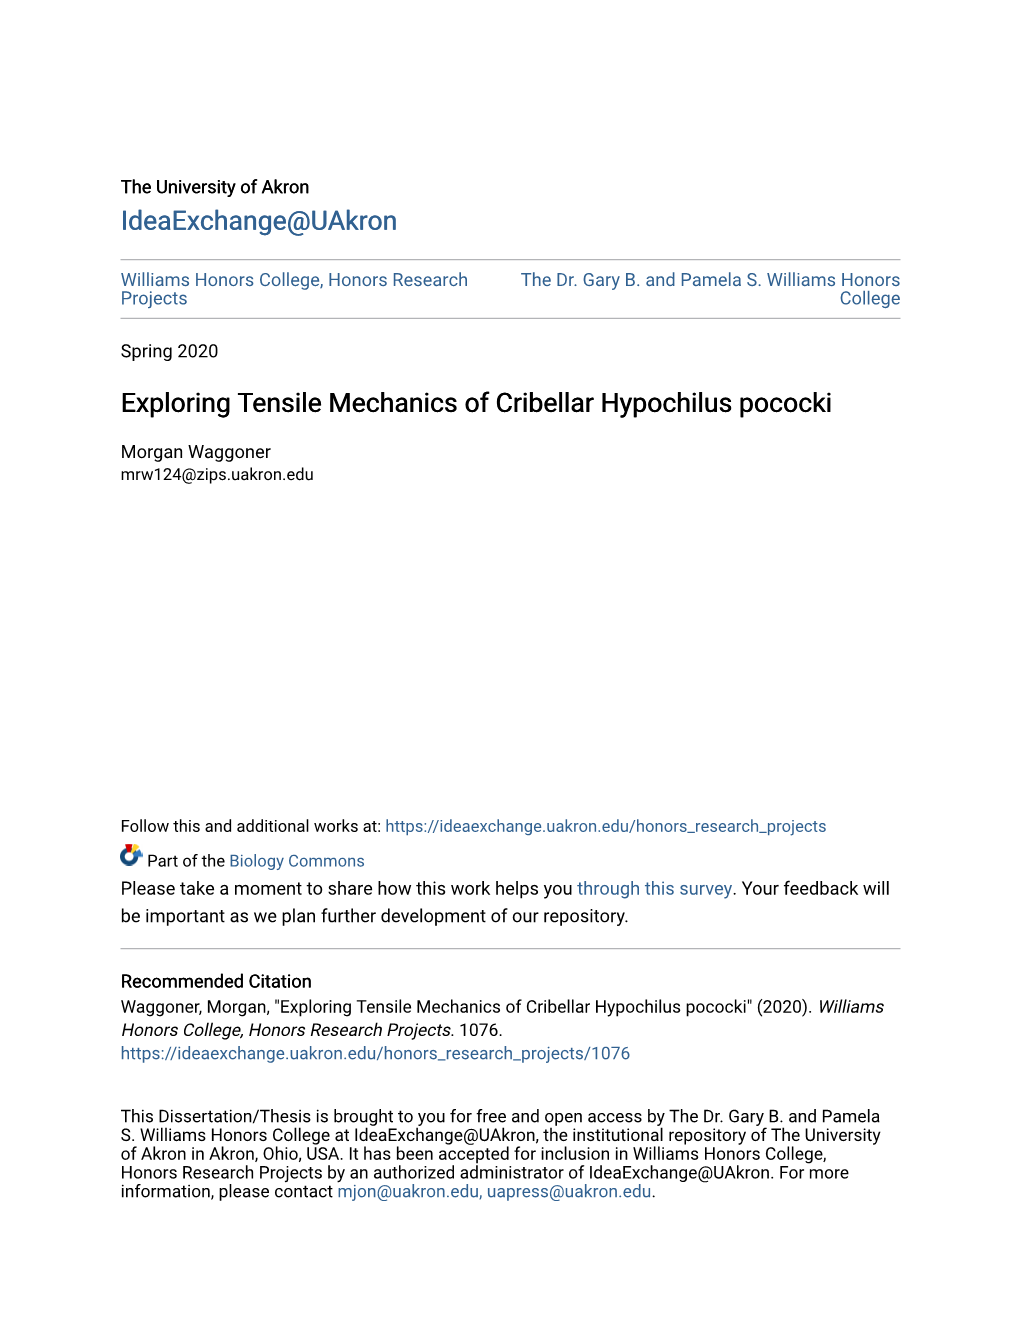 Exploring Tensile Mechanics of Cribellar Hypochilus Pococki